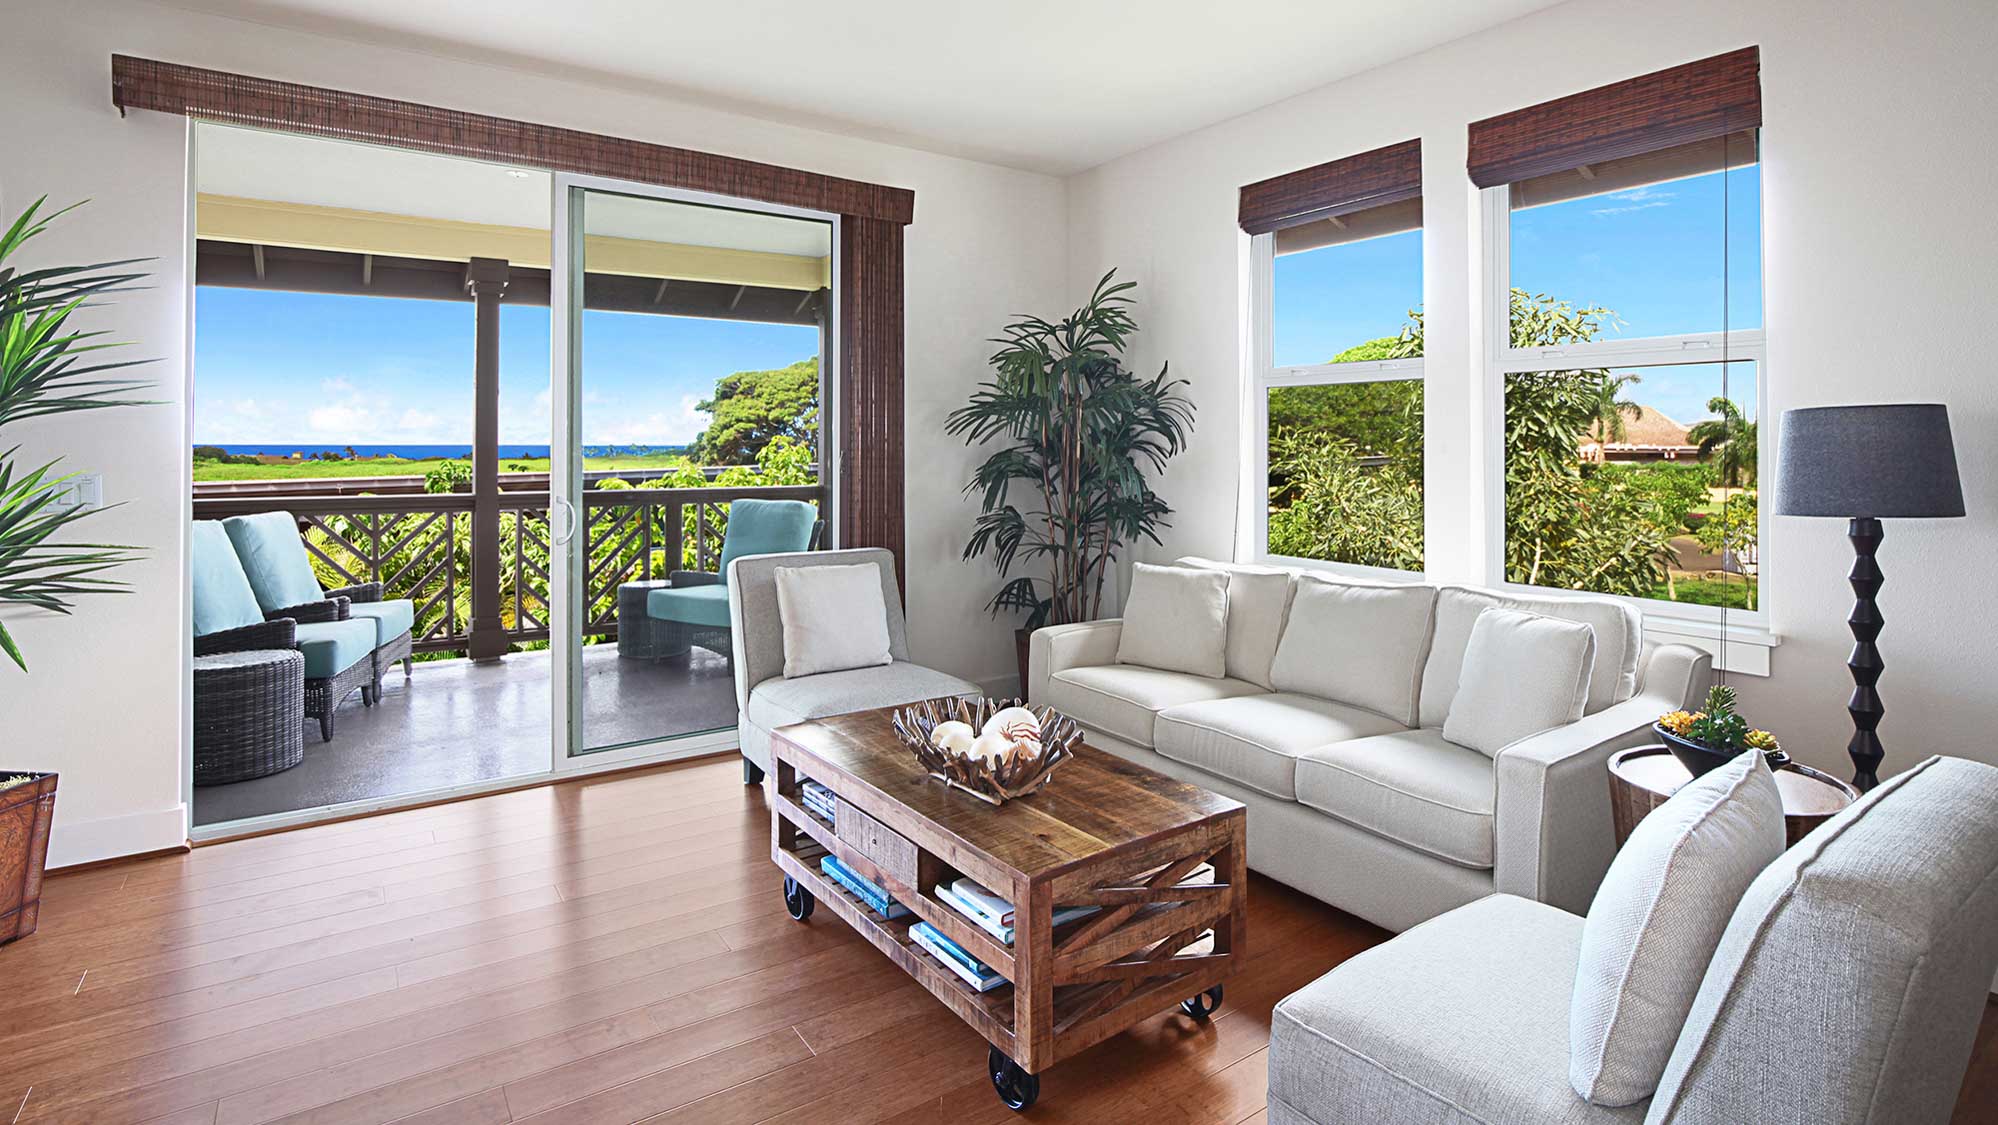 Pili Mai Resort at Poipu #12K - Living Room & Lanai View - Parrish Kauai